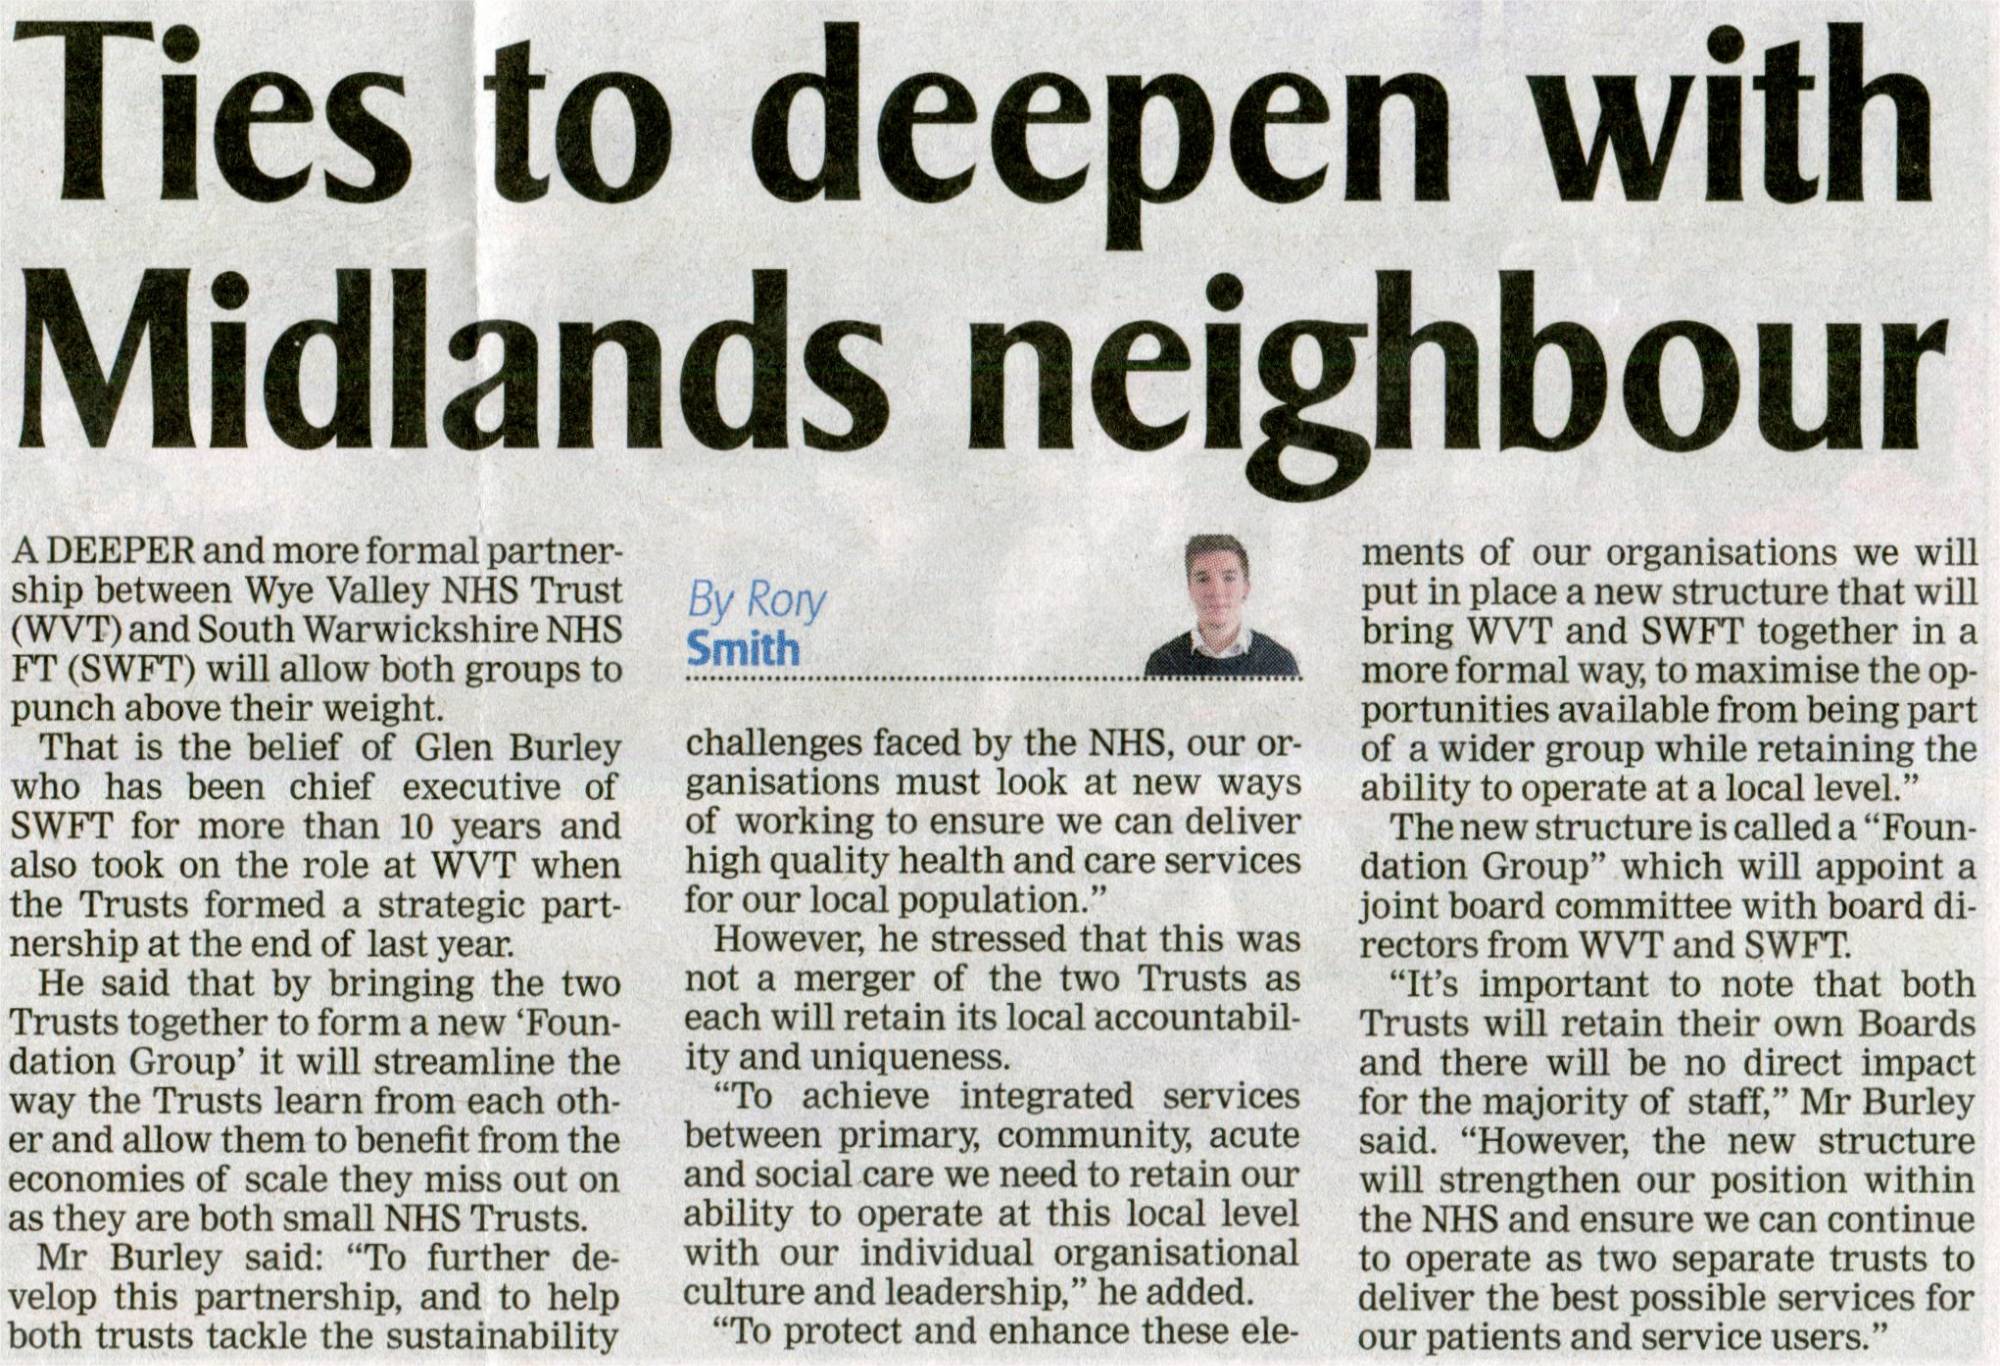 Ties to deepen with Midlands neighbour